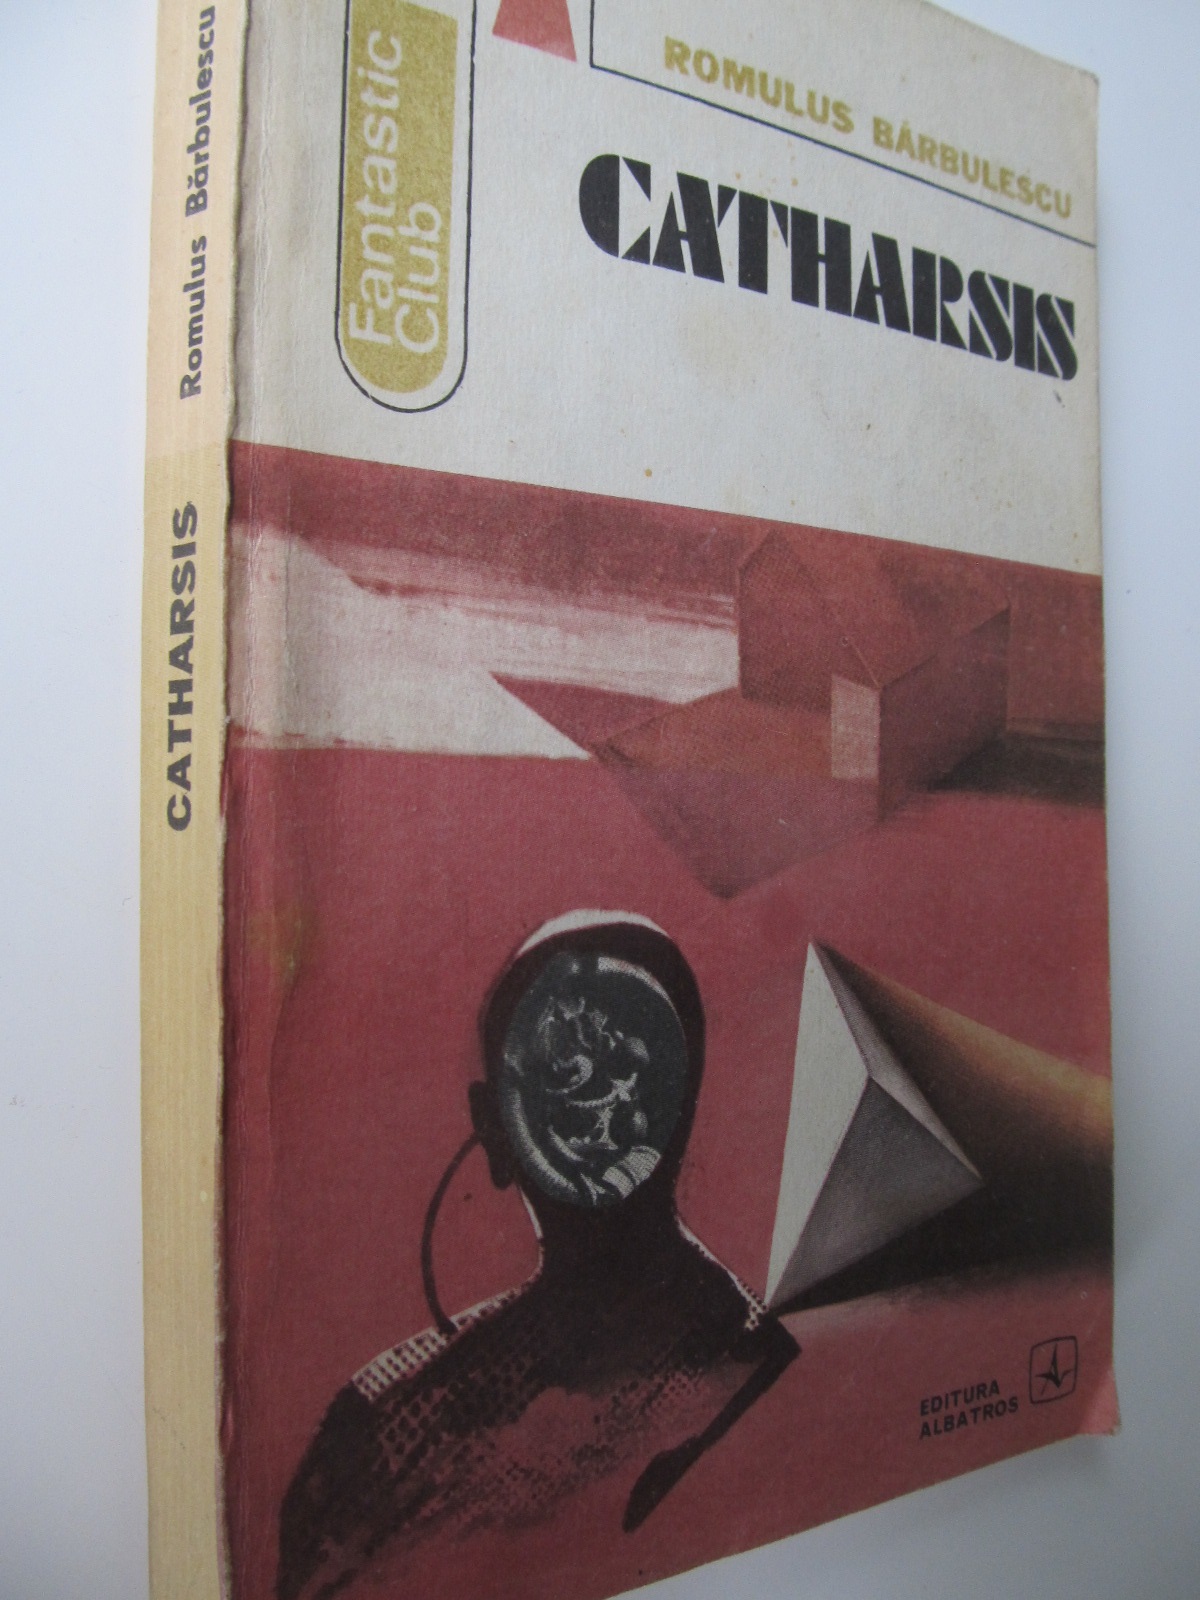 Catharsis - Romulus Barbulescu | Detalii carte